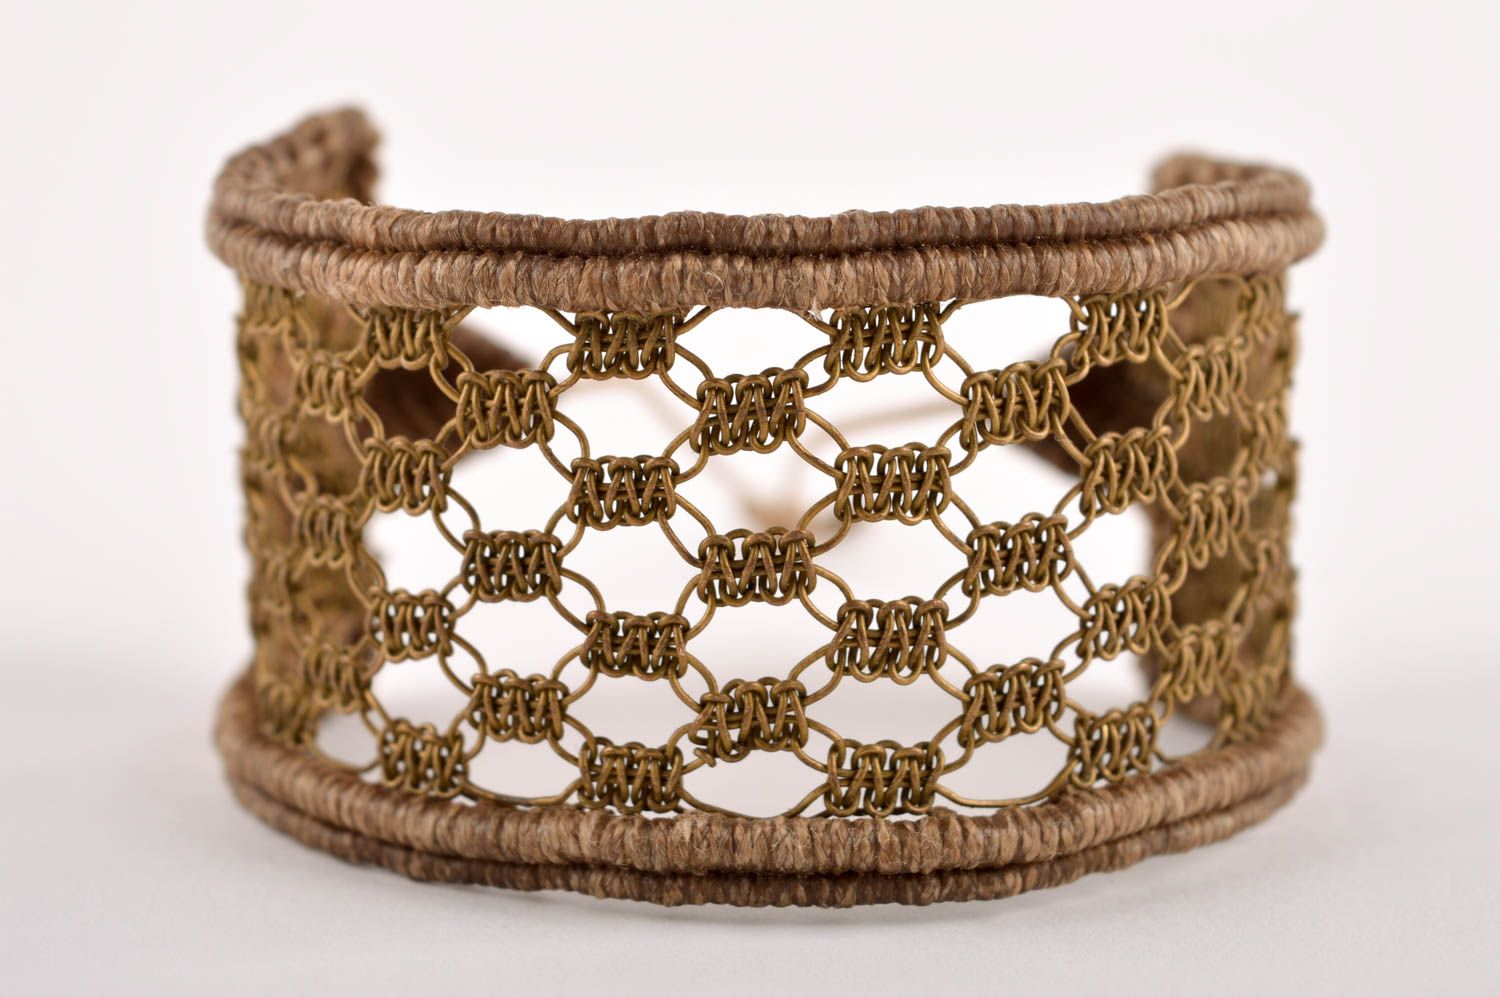 Unusual handmade metal bracelet woven macrame bracelet designs gifts for her photo 3